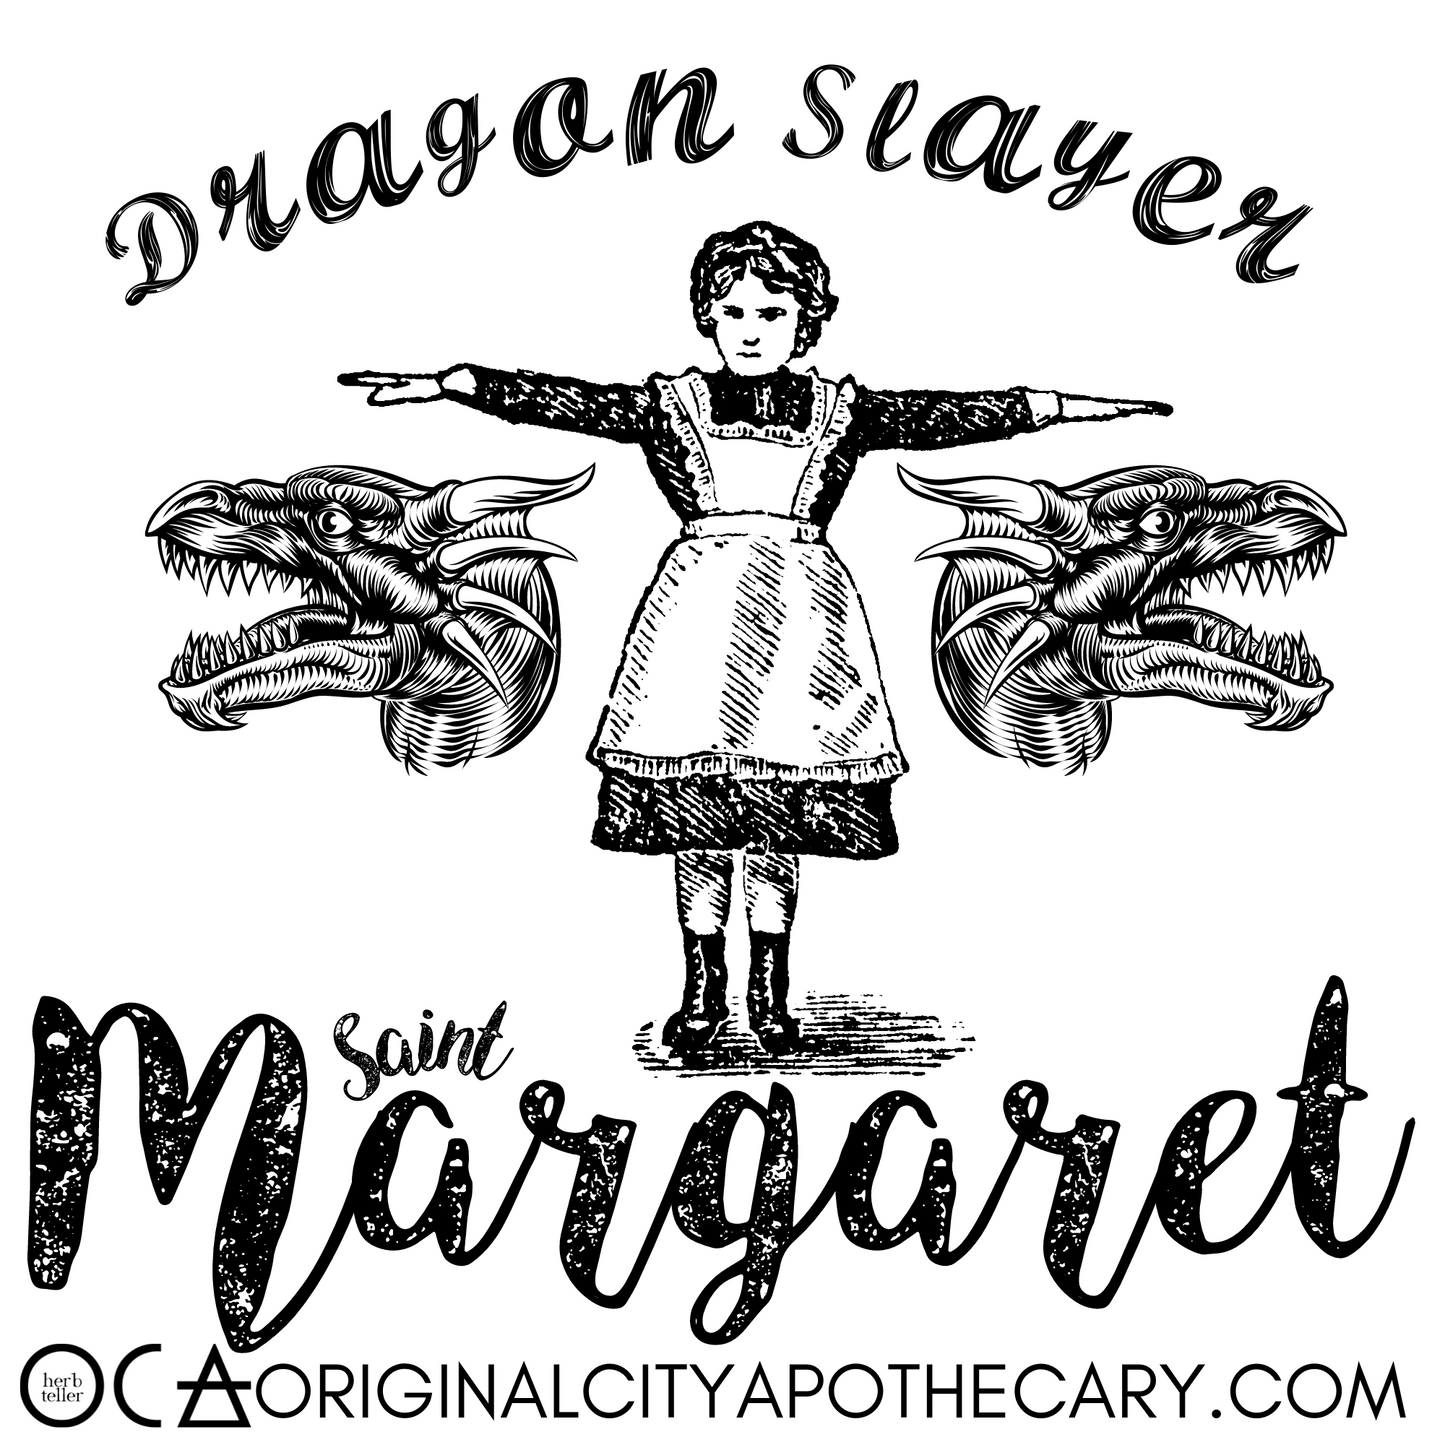 Saint Margaret the Dragon Slayer Herbmusement (Tea/Oil/Stones/Herbtention) Ritual Set